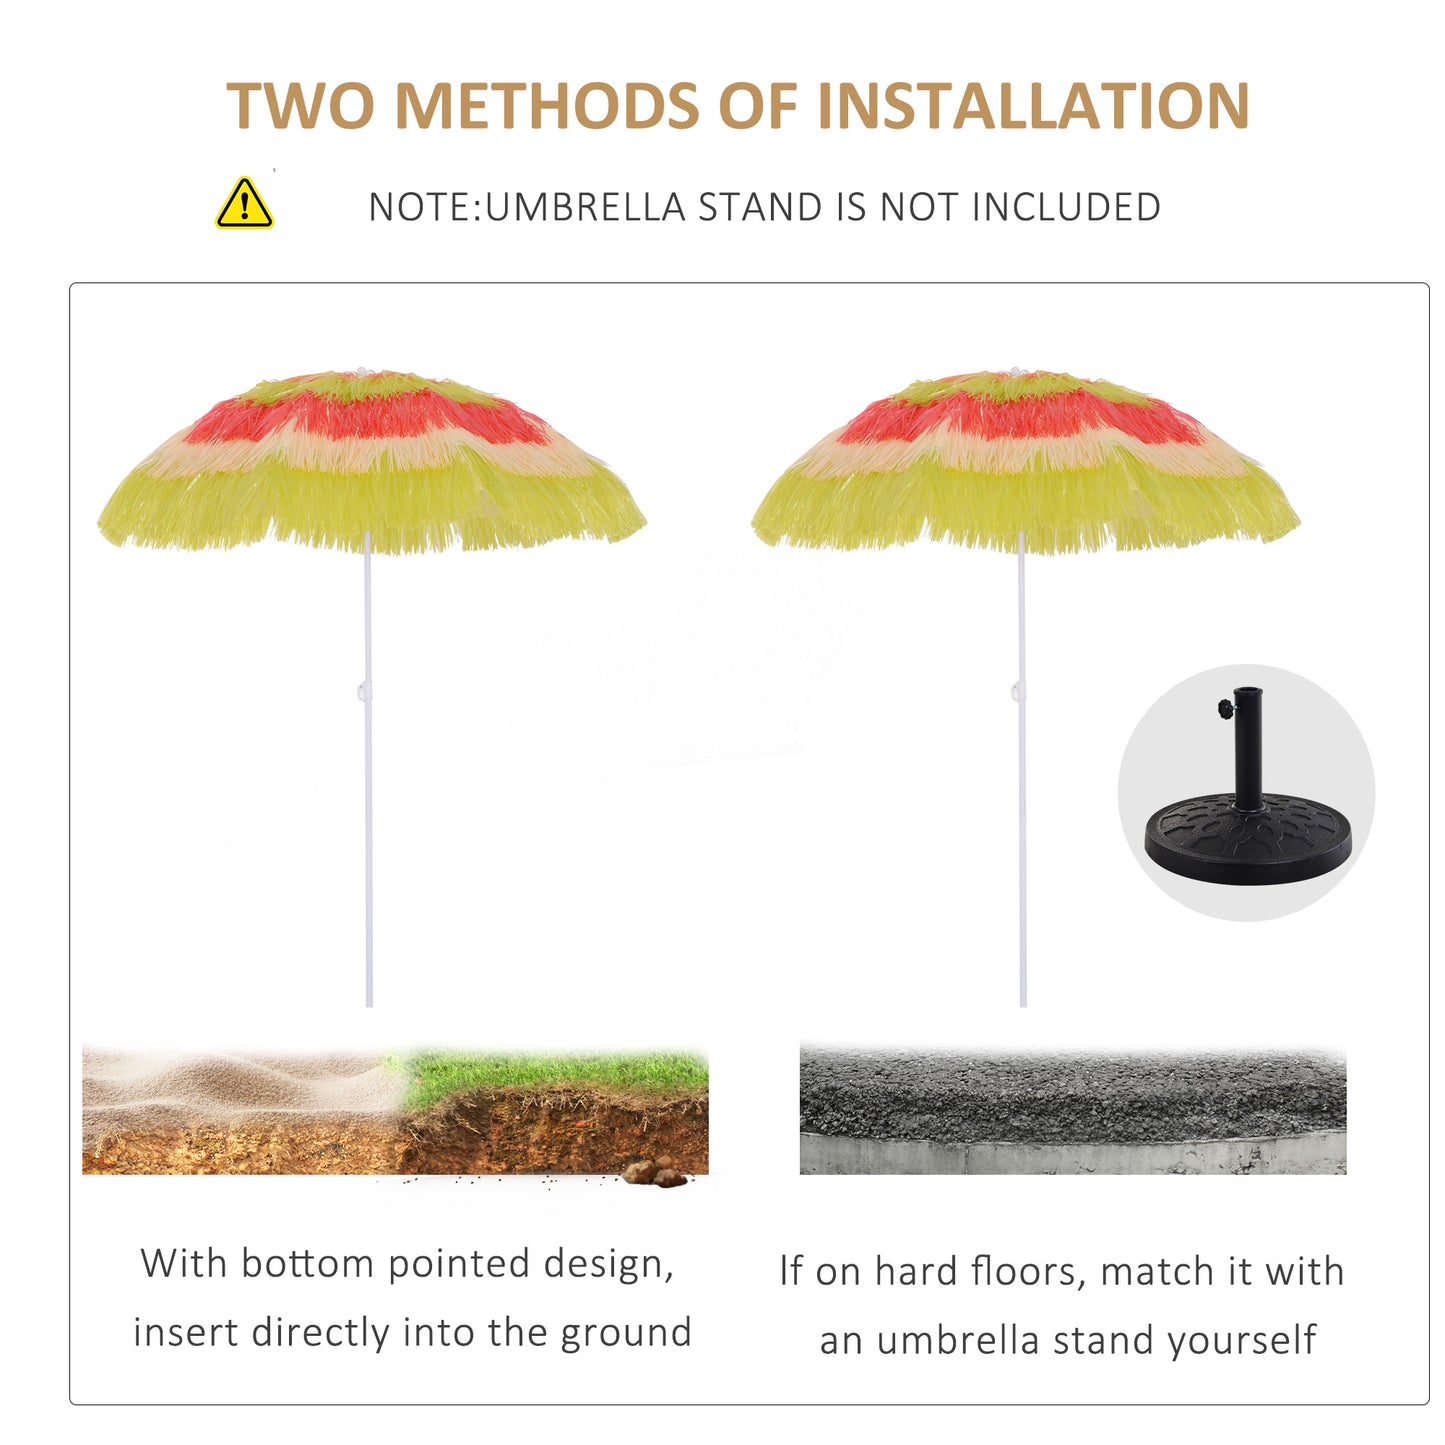 Outsunny Portable Beach Umbrella: Foldable Rainbow Parasol for Hawaiian-Style Sun Protection